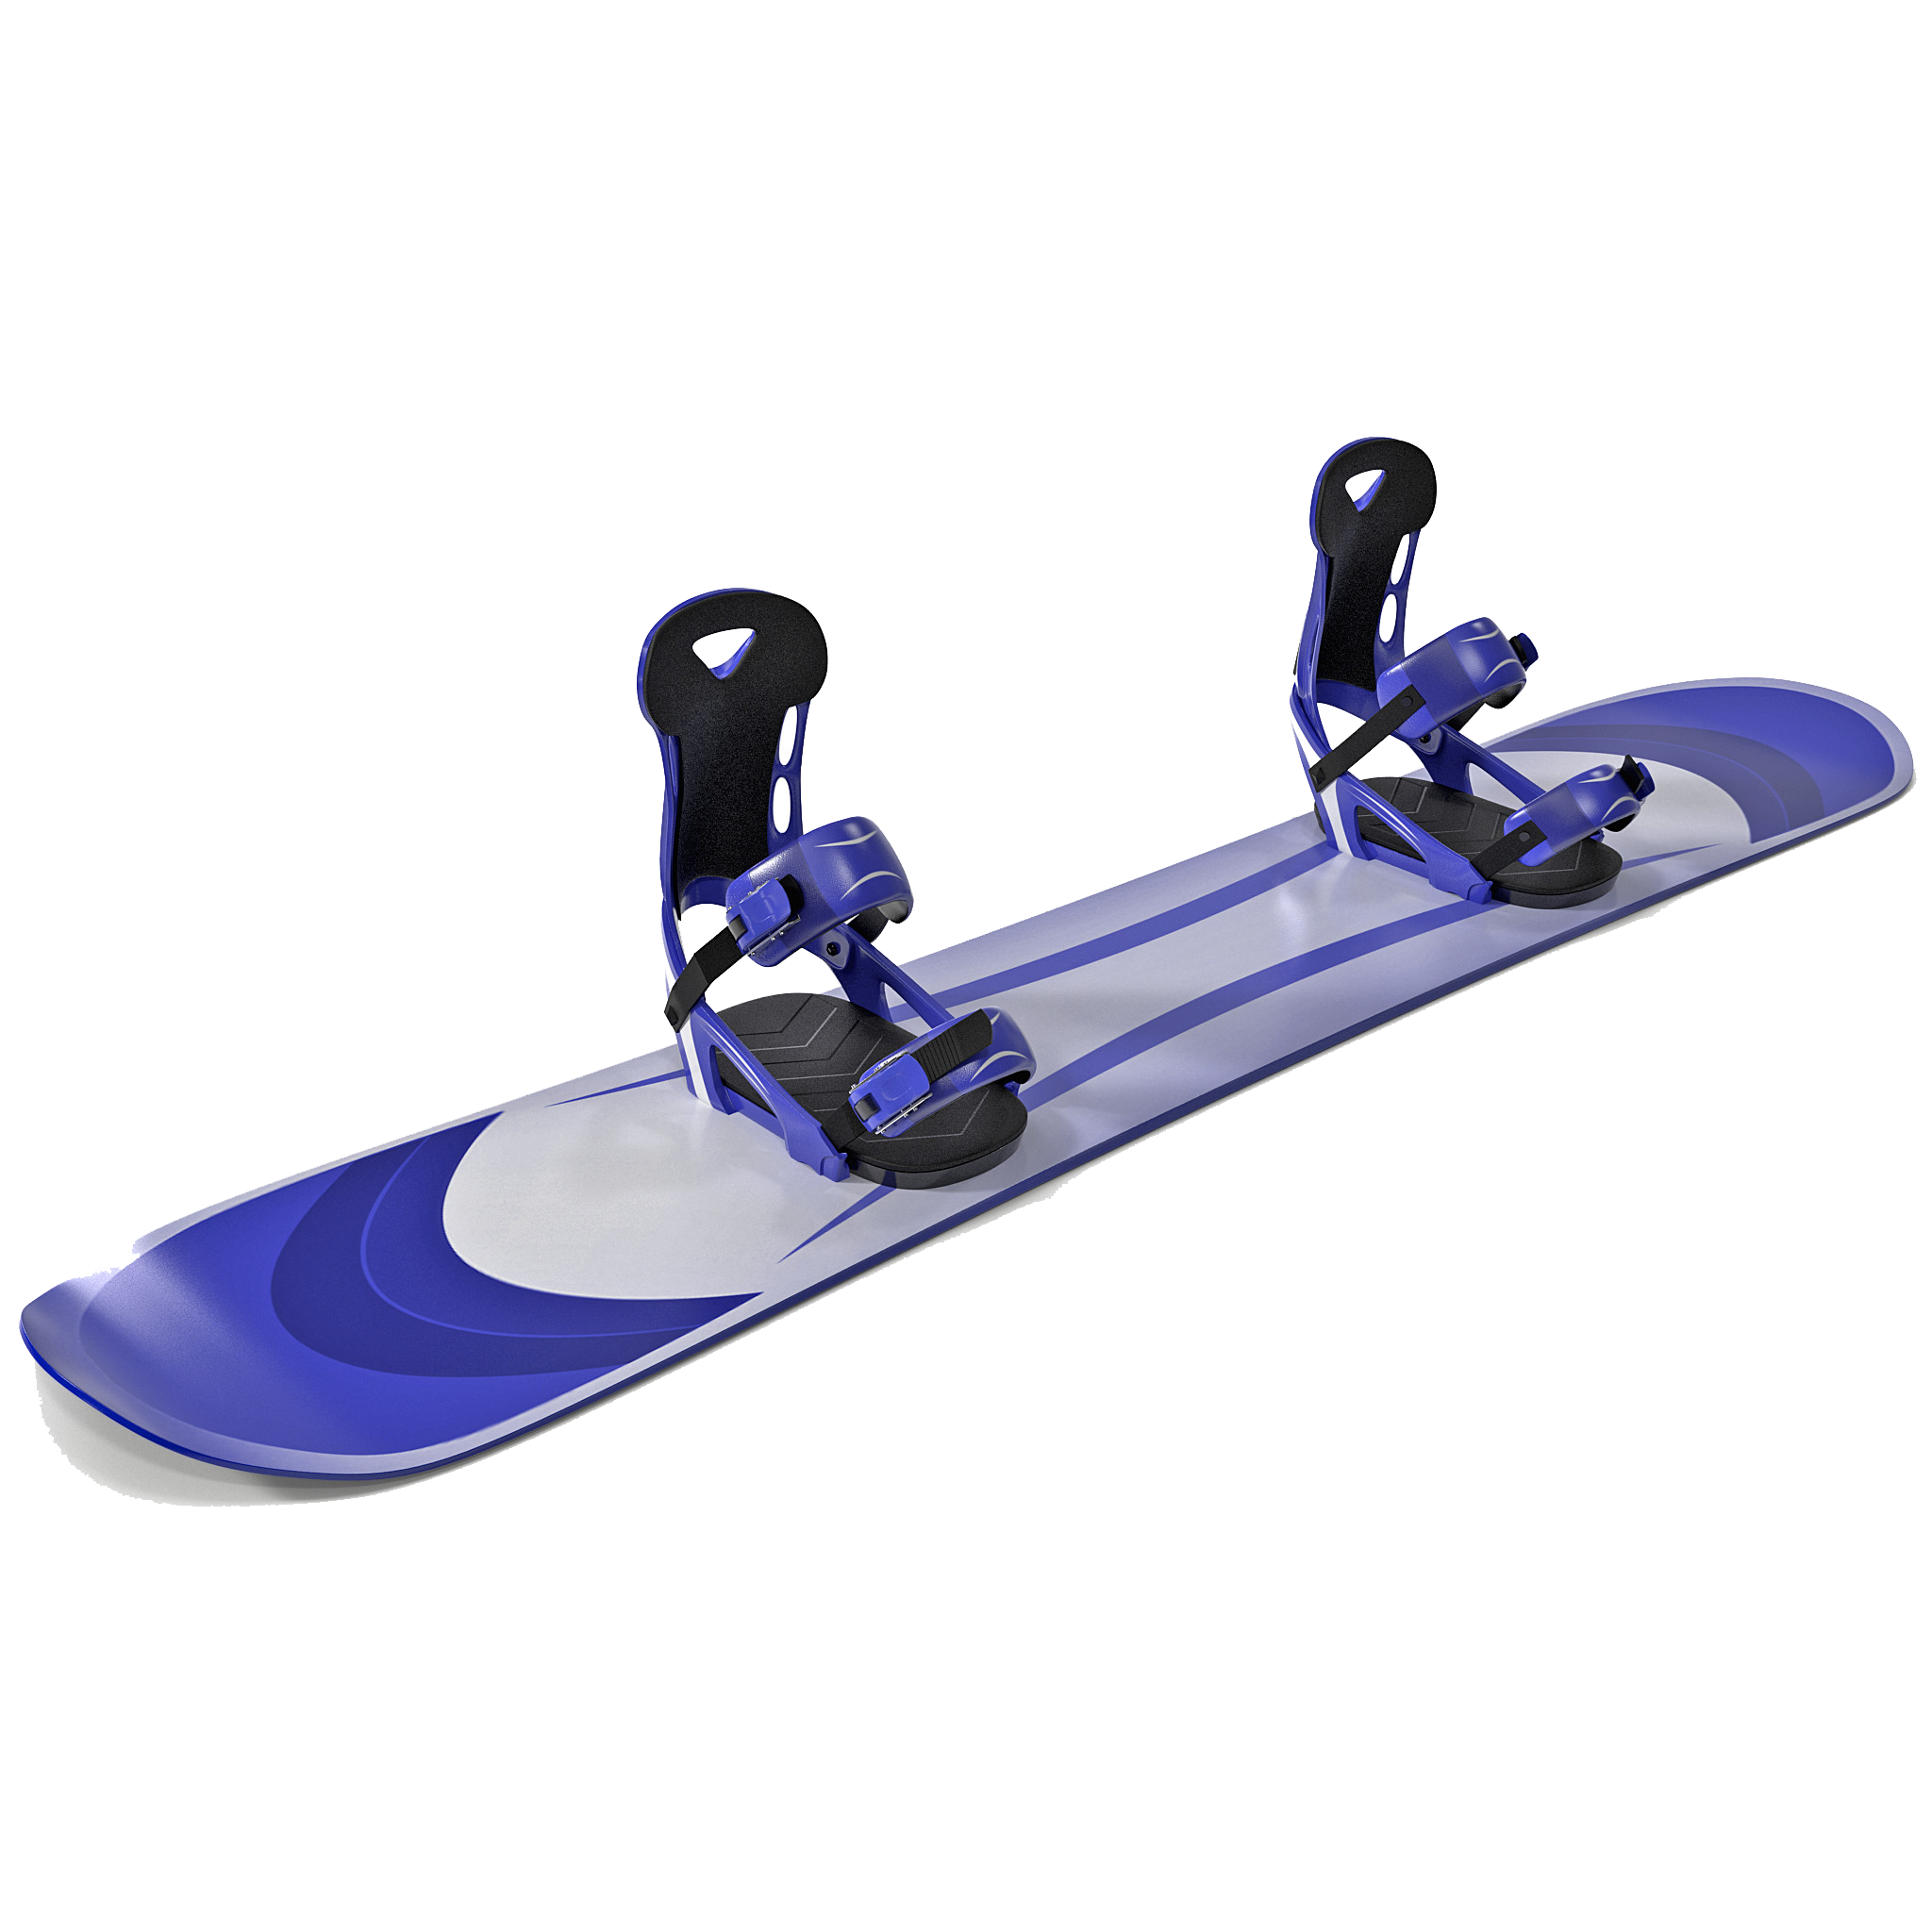 Snowboard png hd